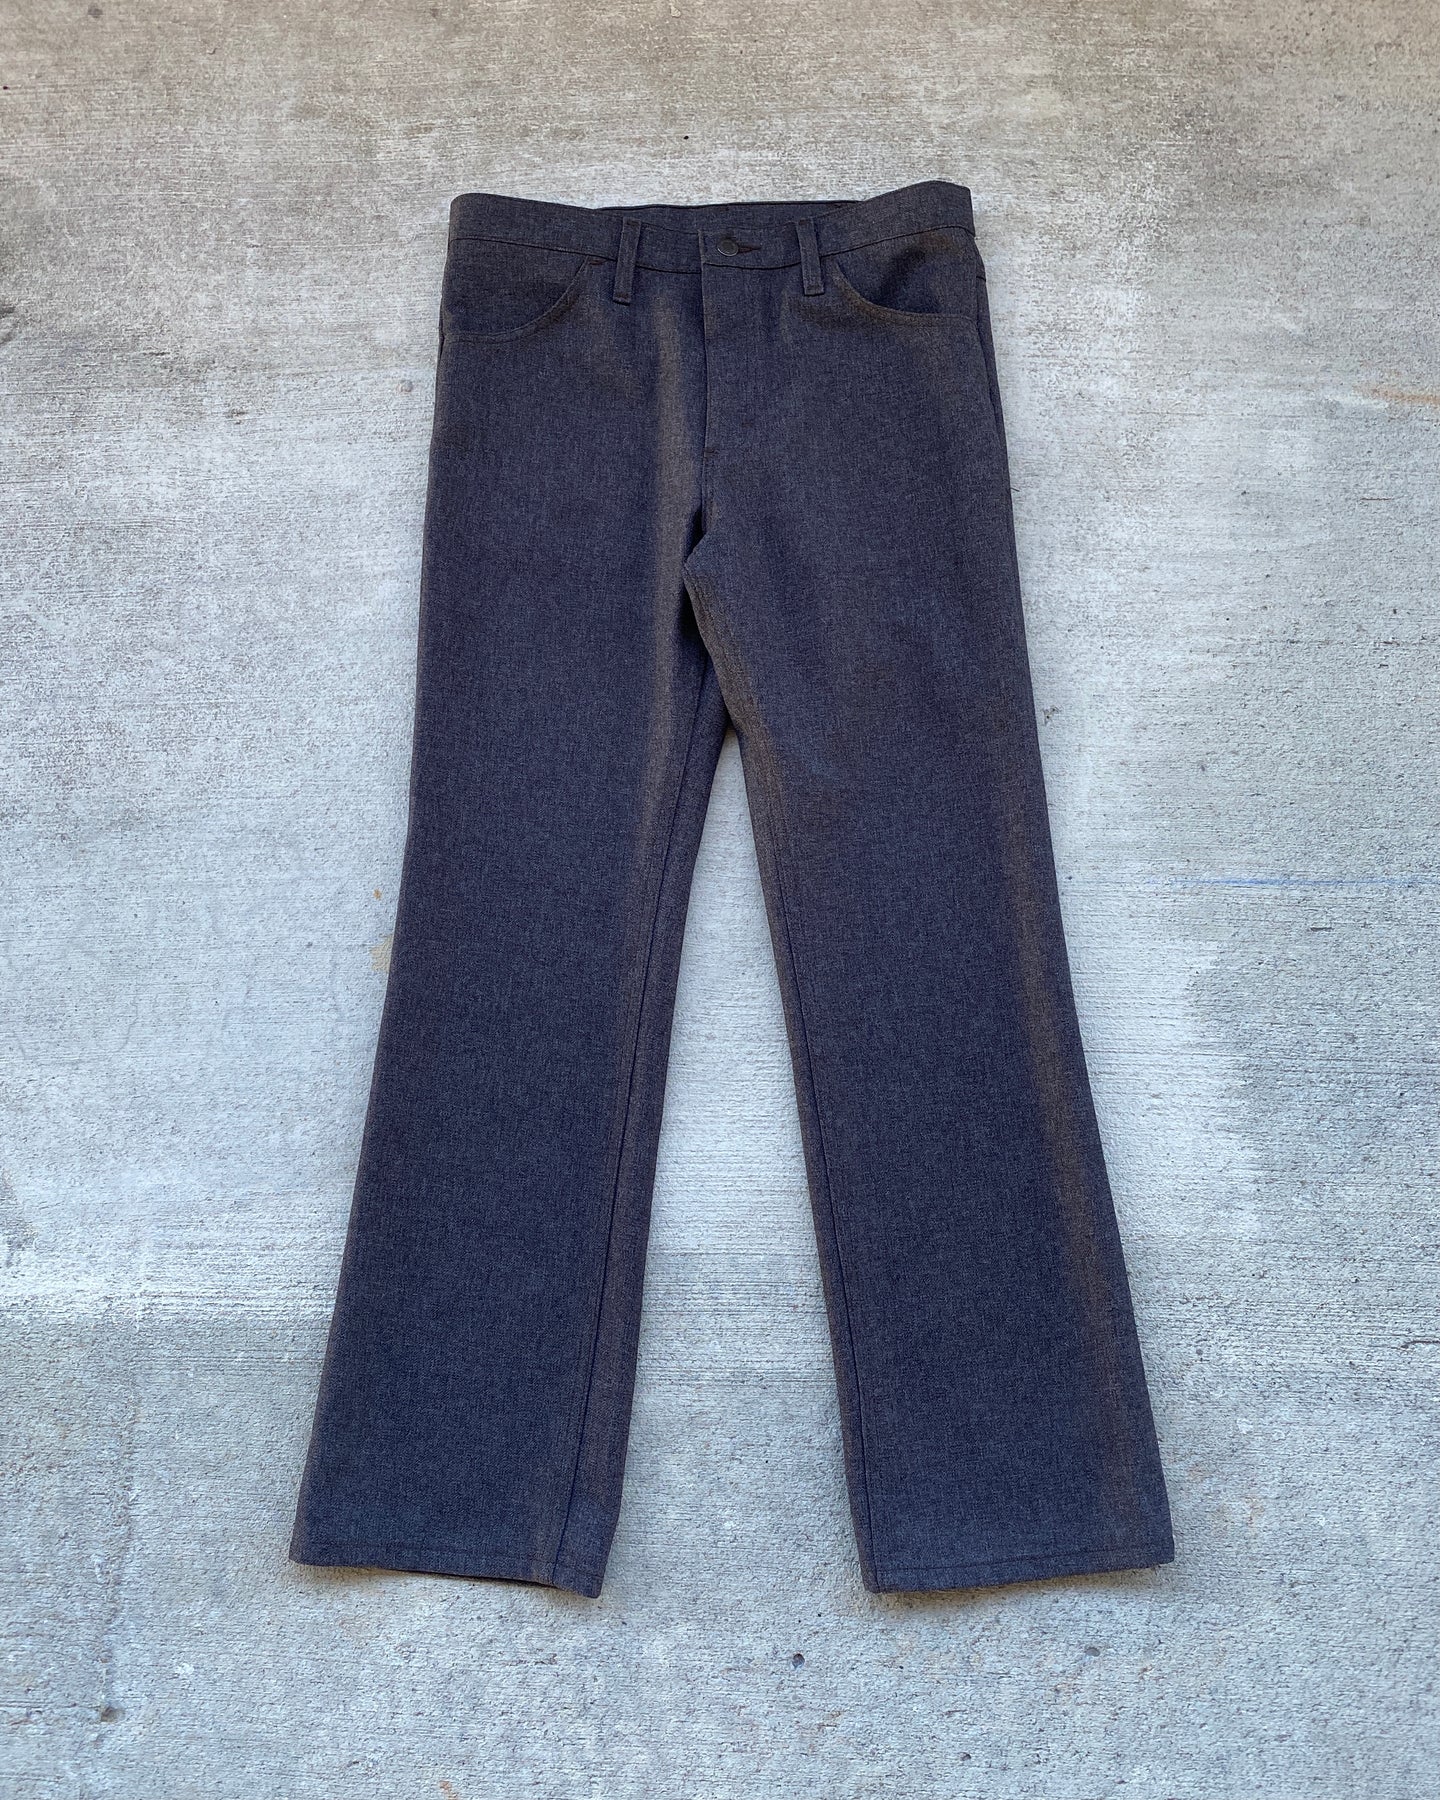 1980s Wrangler Flare Dress Jeans - Size 32 x 30